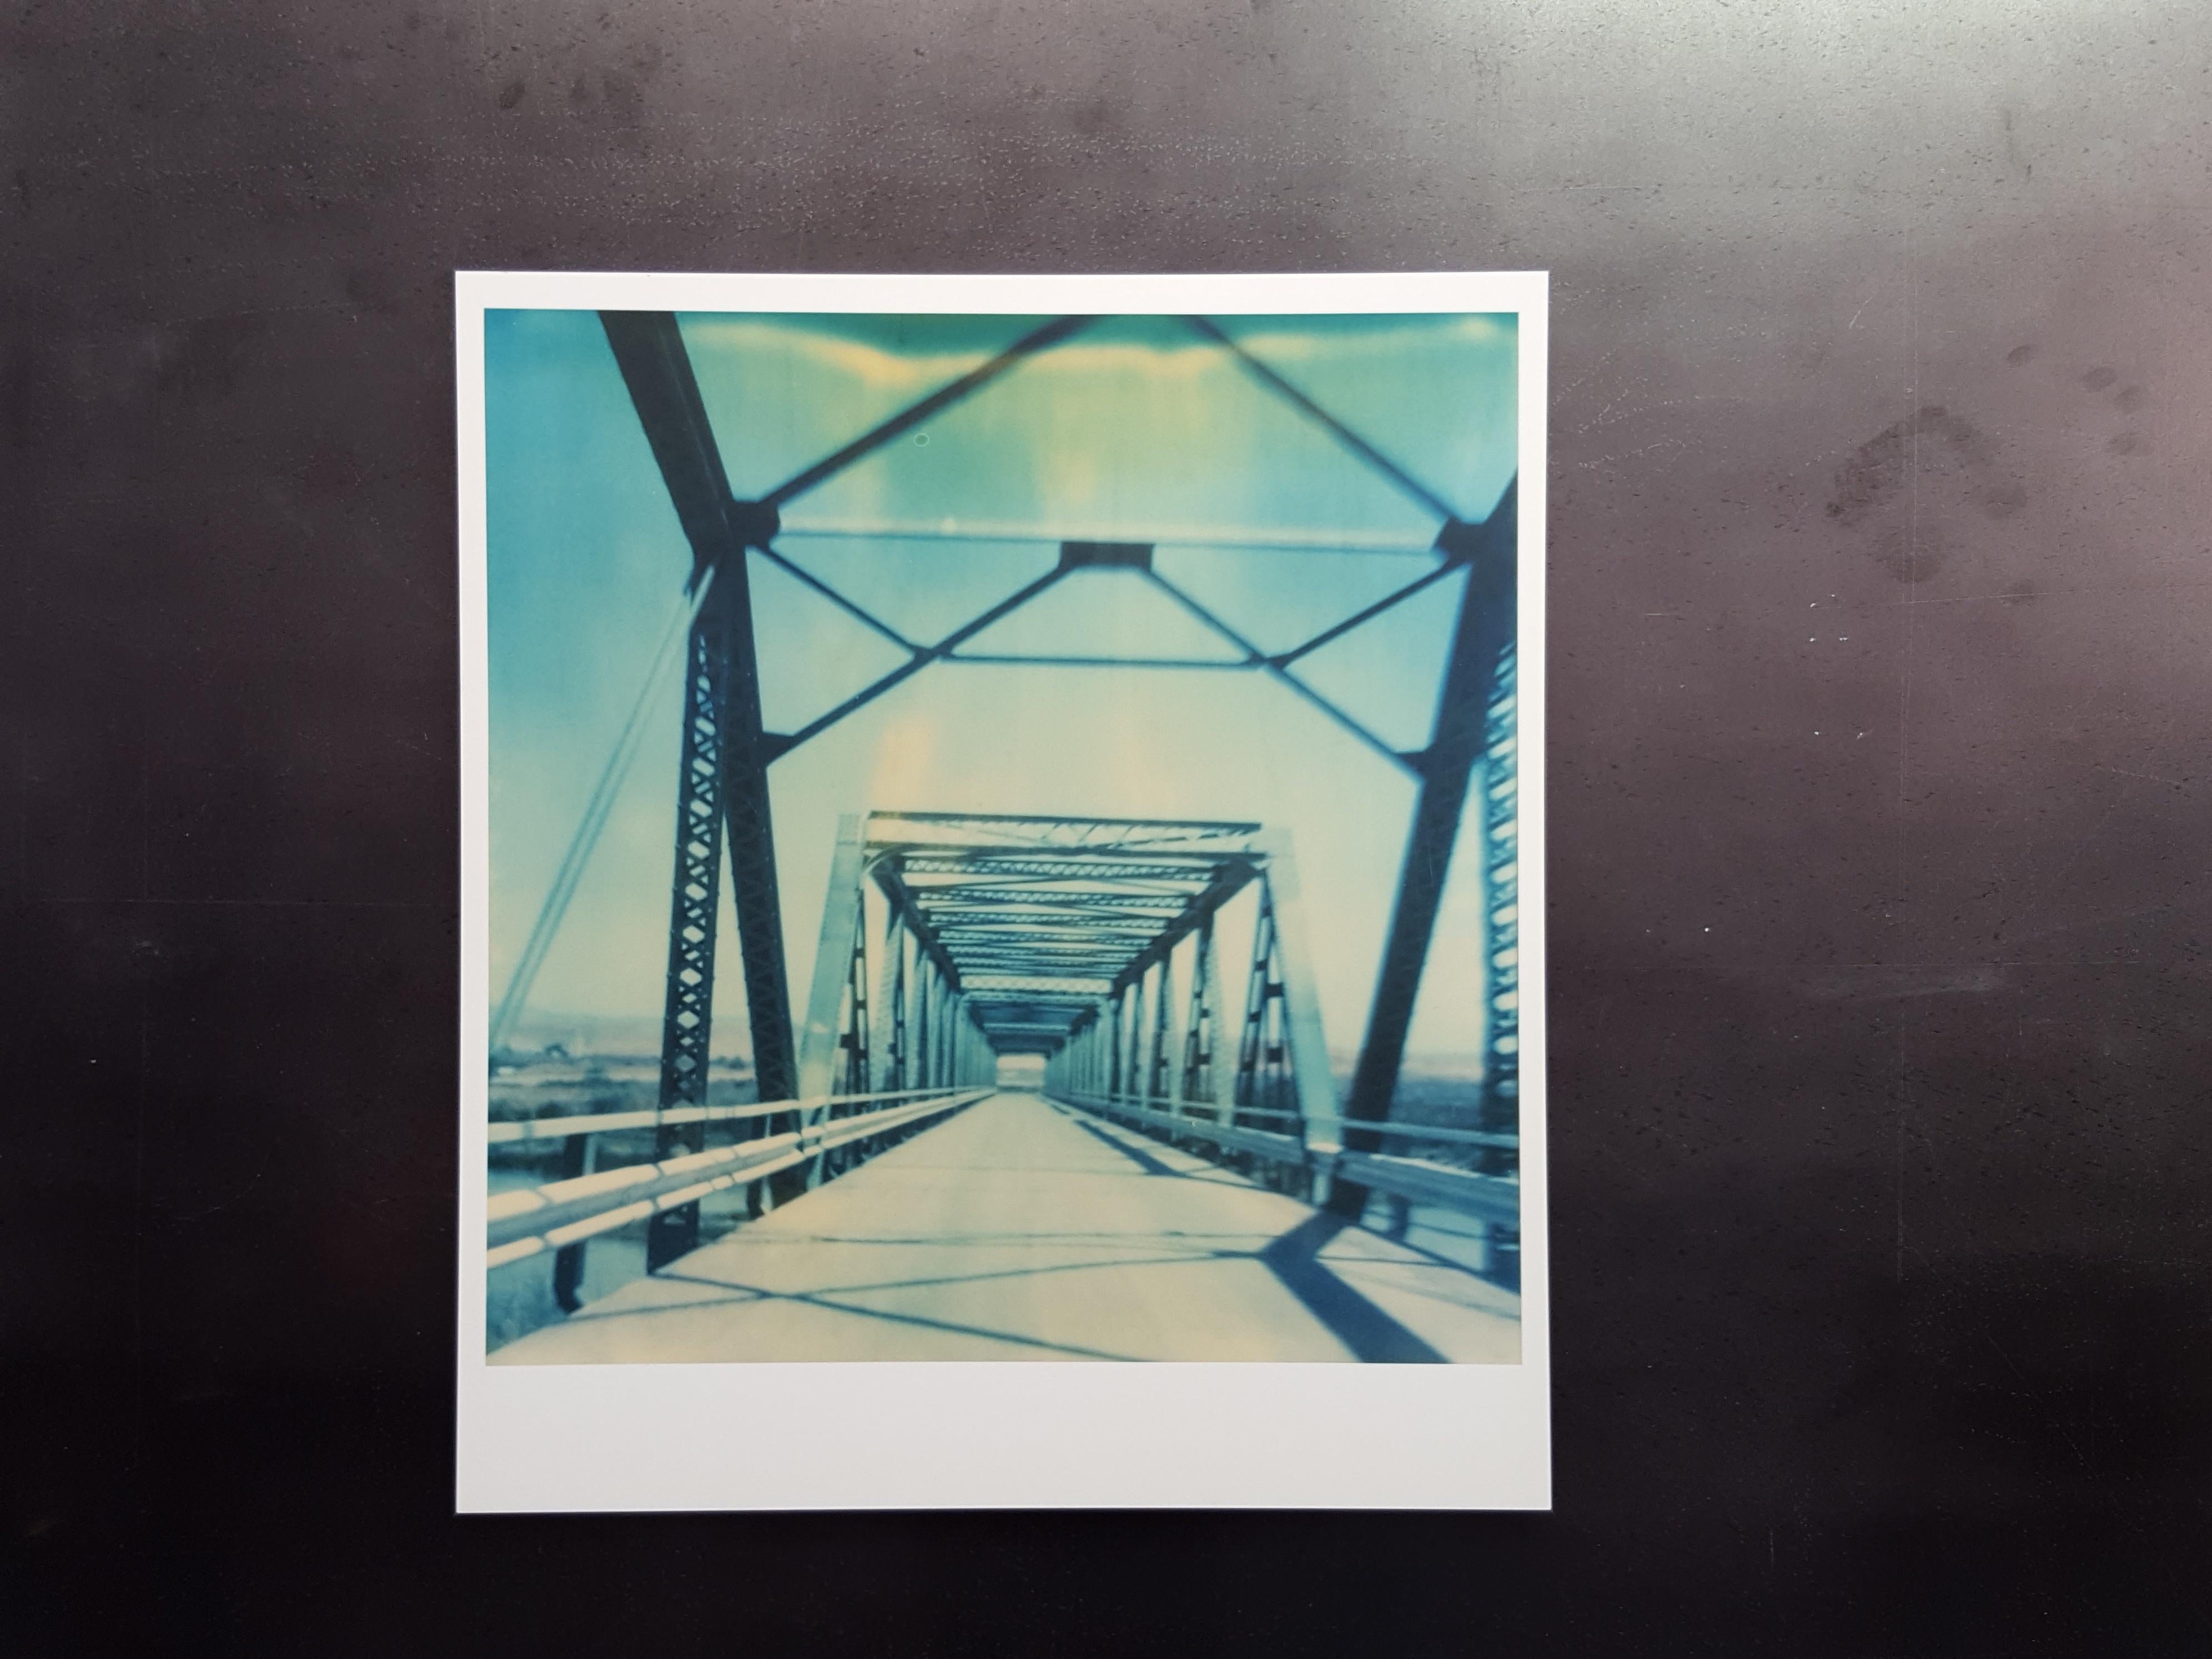 Blue Bridge - Analog, Mounted, Vintage, Contemporary, Landscape, Polaroid, Color - Photograph by Stefanie Schneider